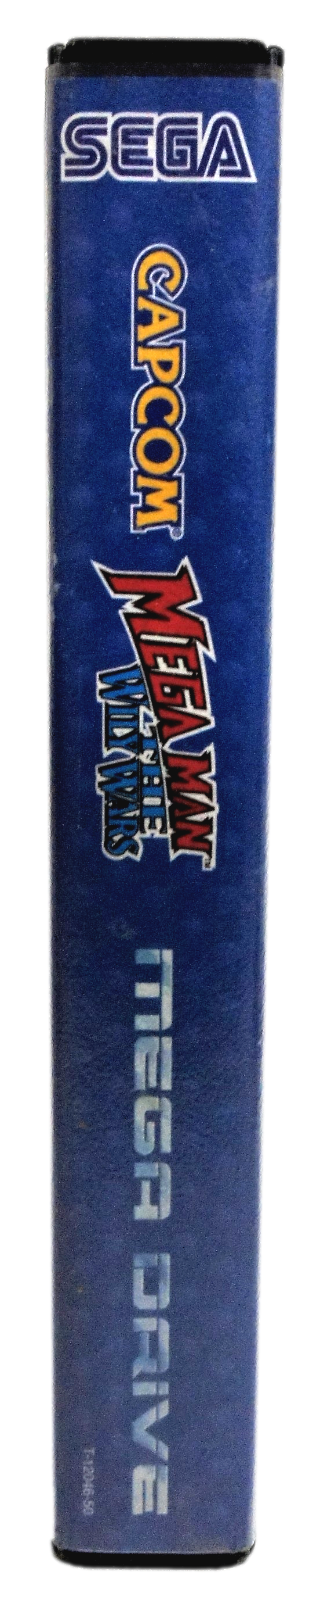 Mega Man The Willy Wars Sega Mega Drive *Complete* (Preowned)